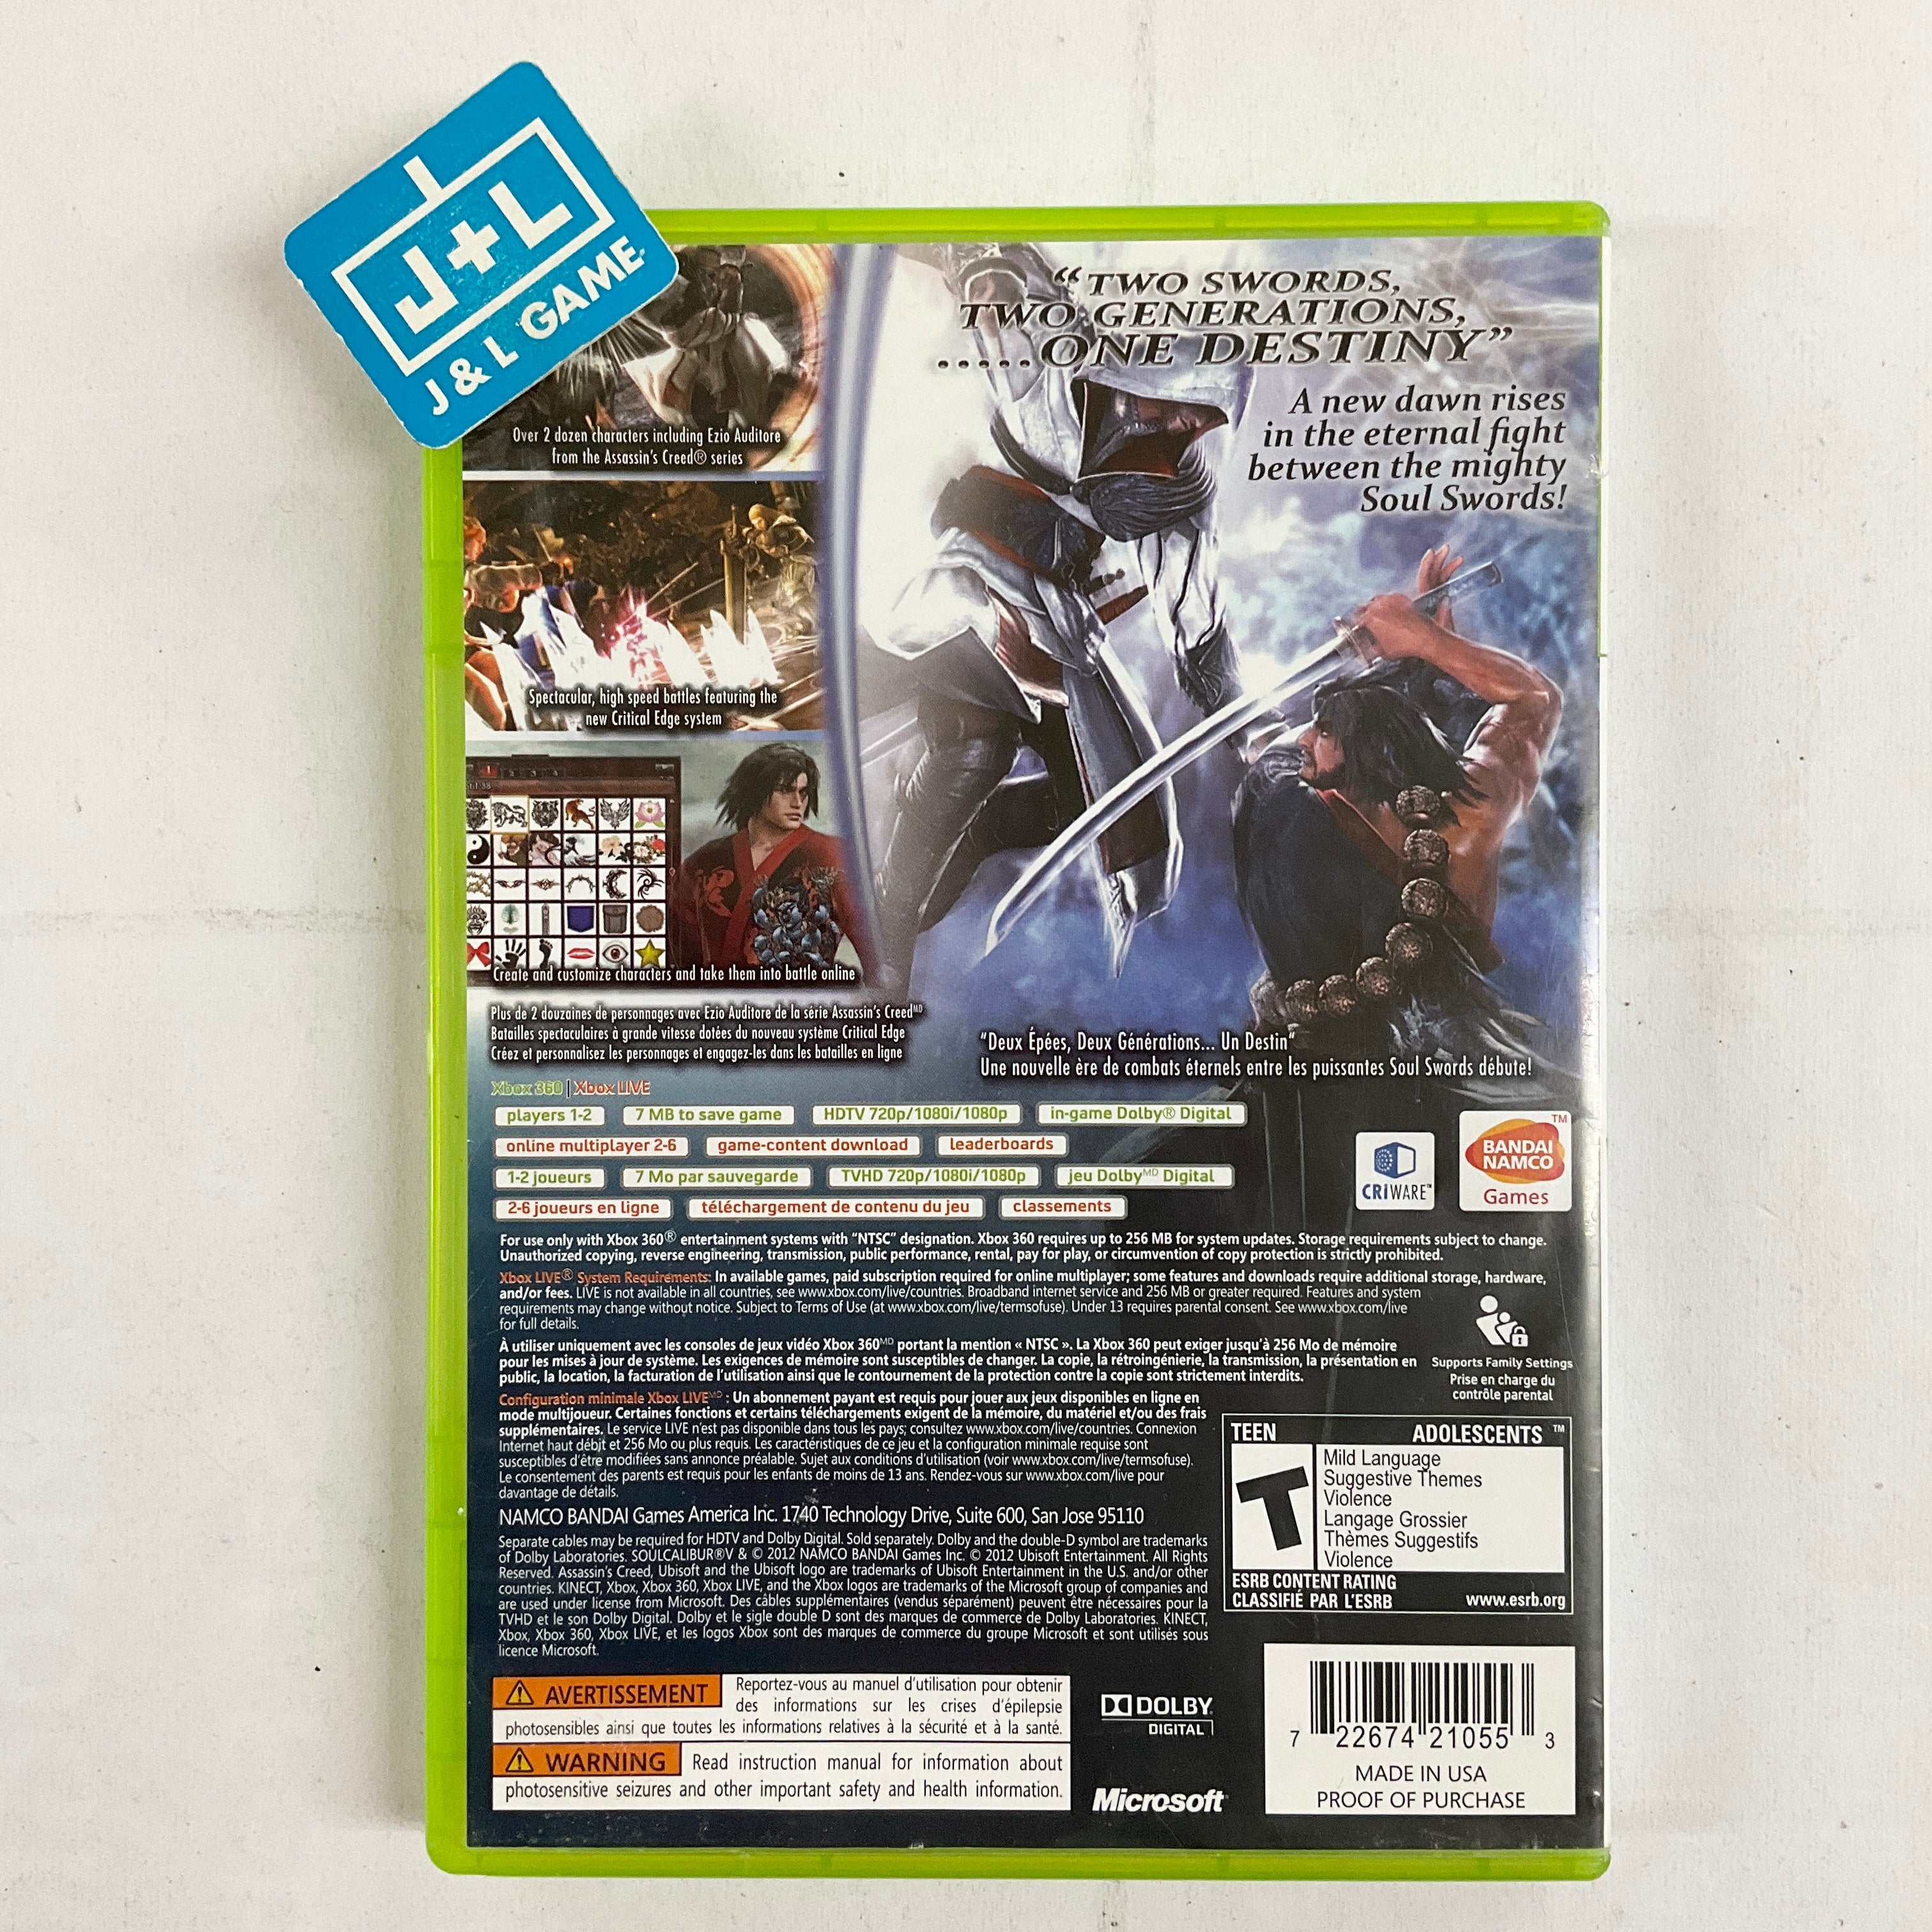 Soul Calibur V - Xbox 360 [Pre-Owned] Video Games BANDAI NAMCO Entertainment   